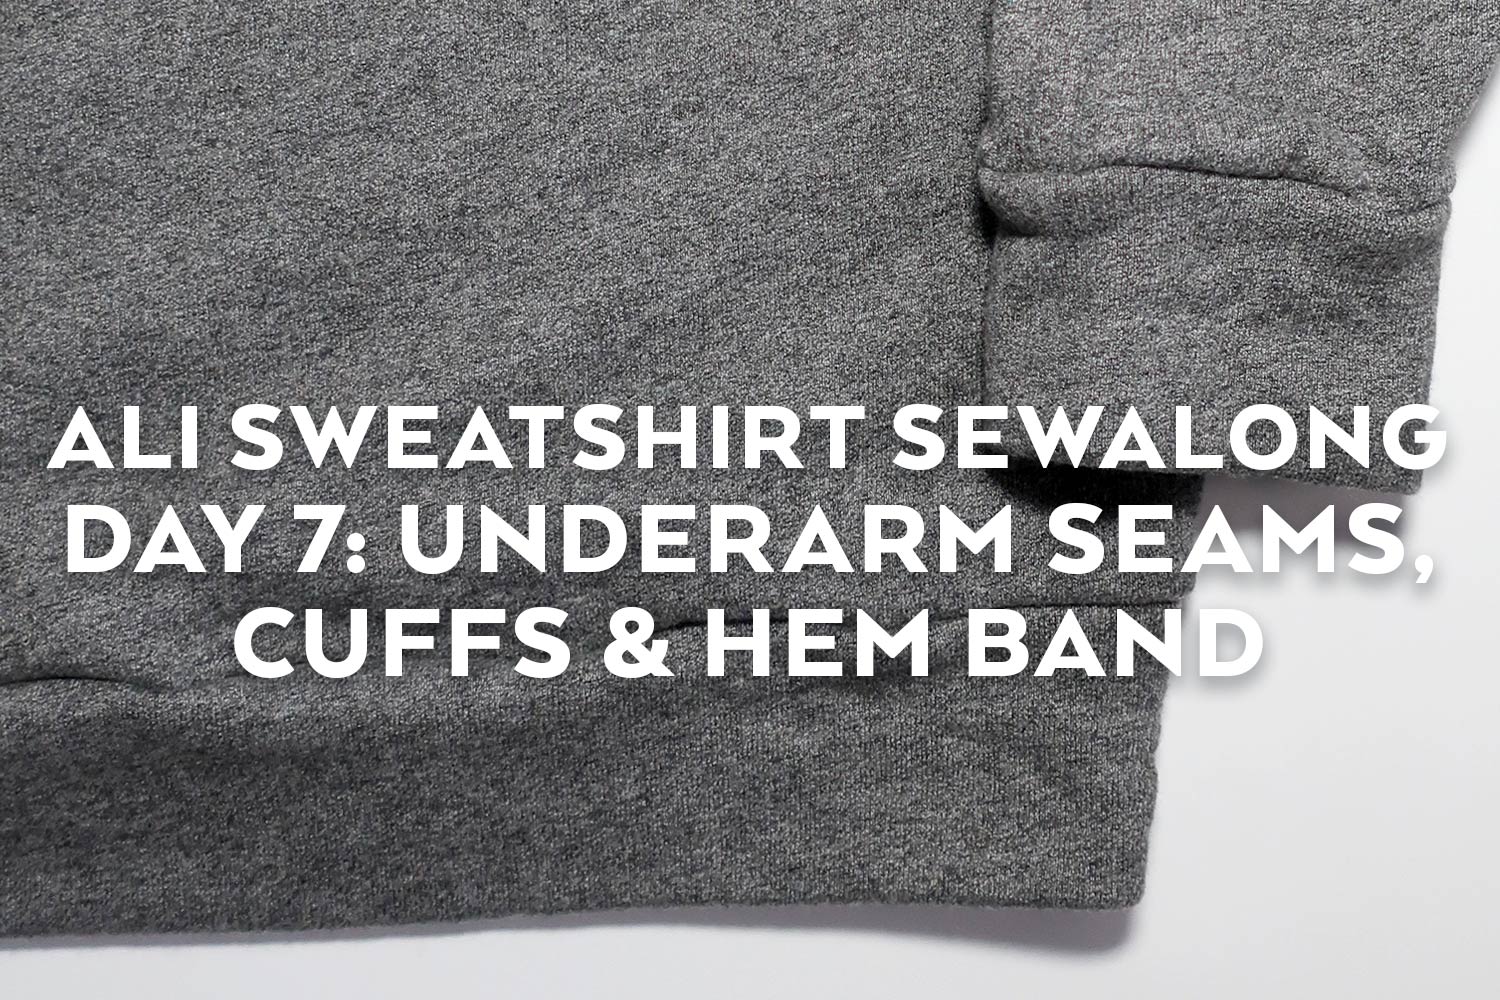 Ali Sweatshirt Sewalong Day 7 - Underarm Seam, Cuffs & Hem Band